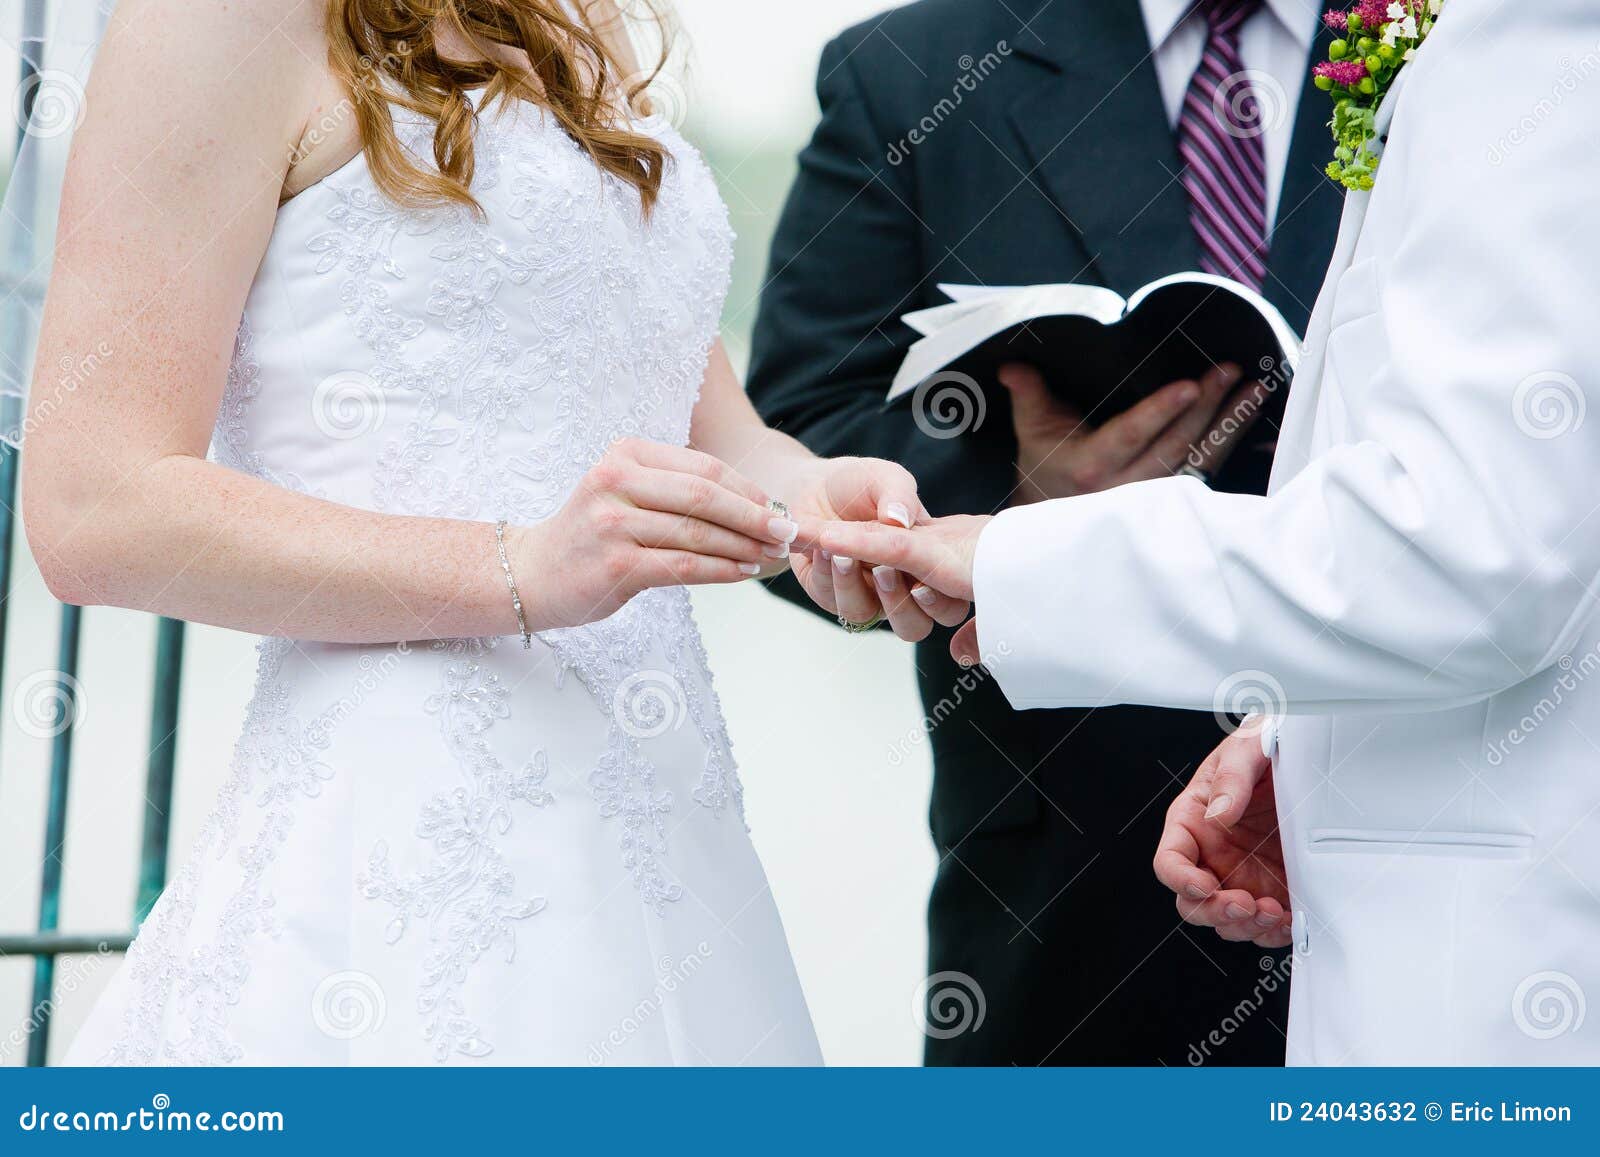 Wedding ring exchange stock photo. Image of traditions - 24043632